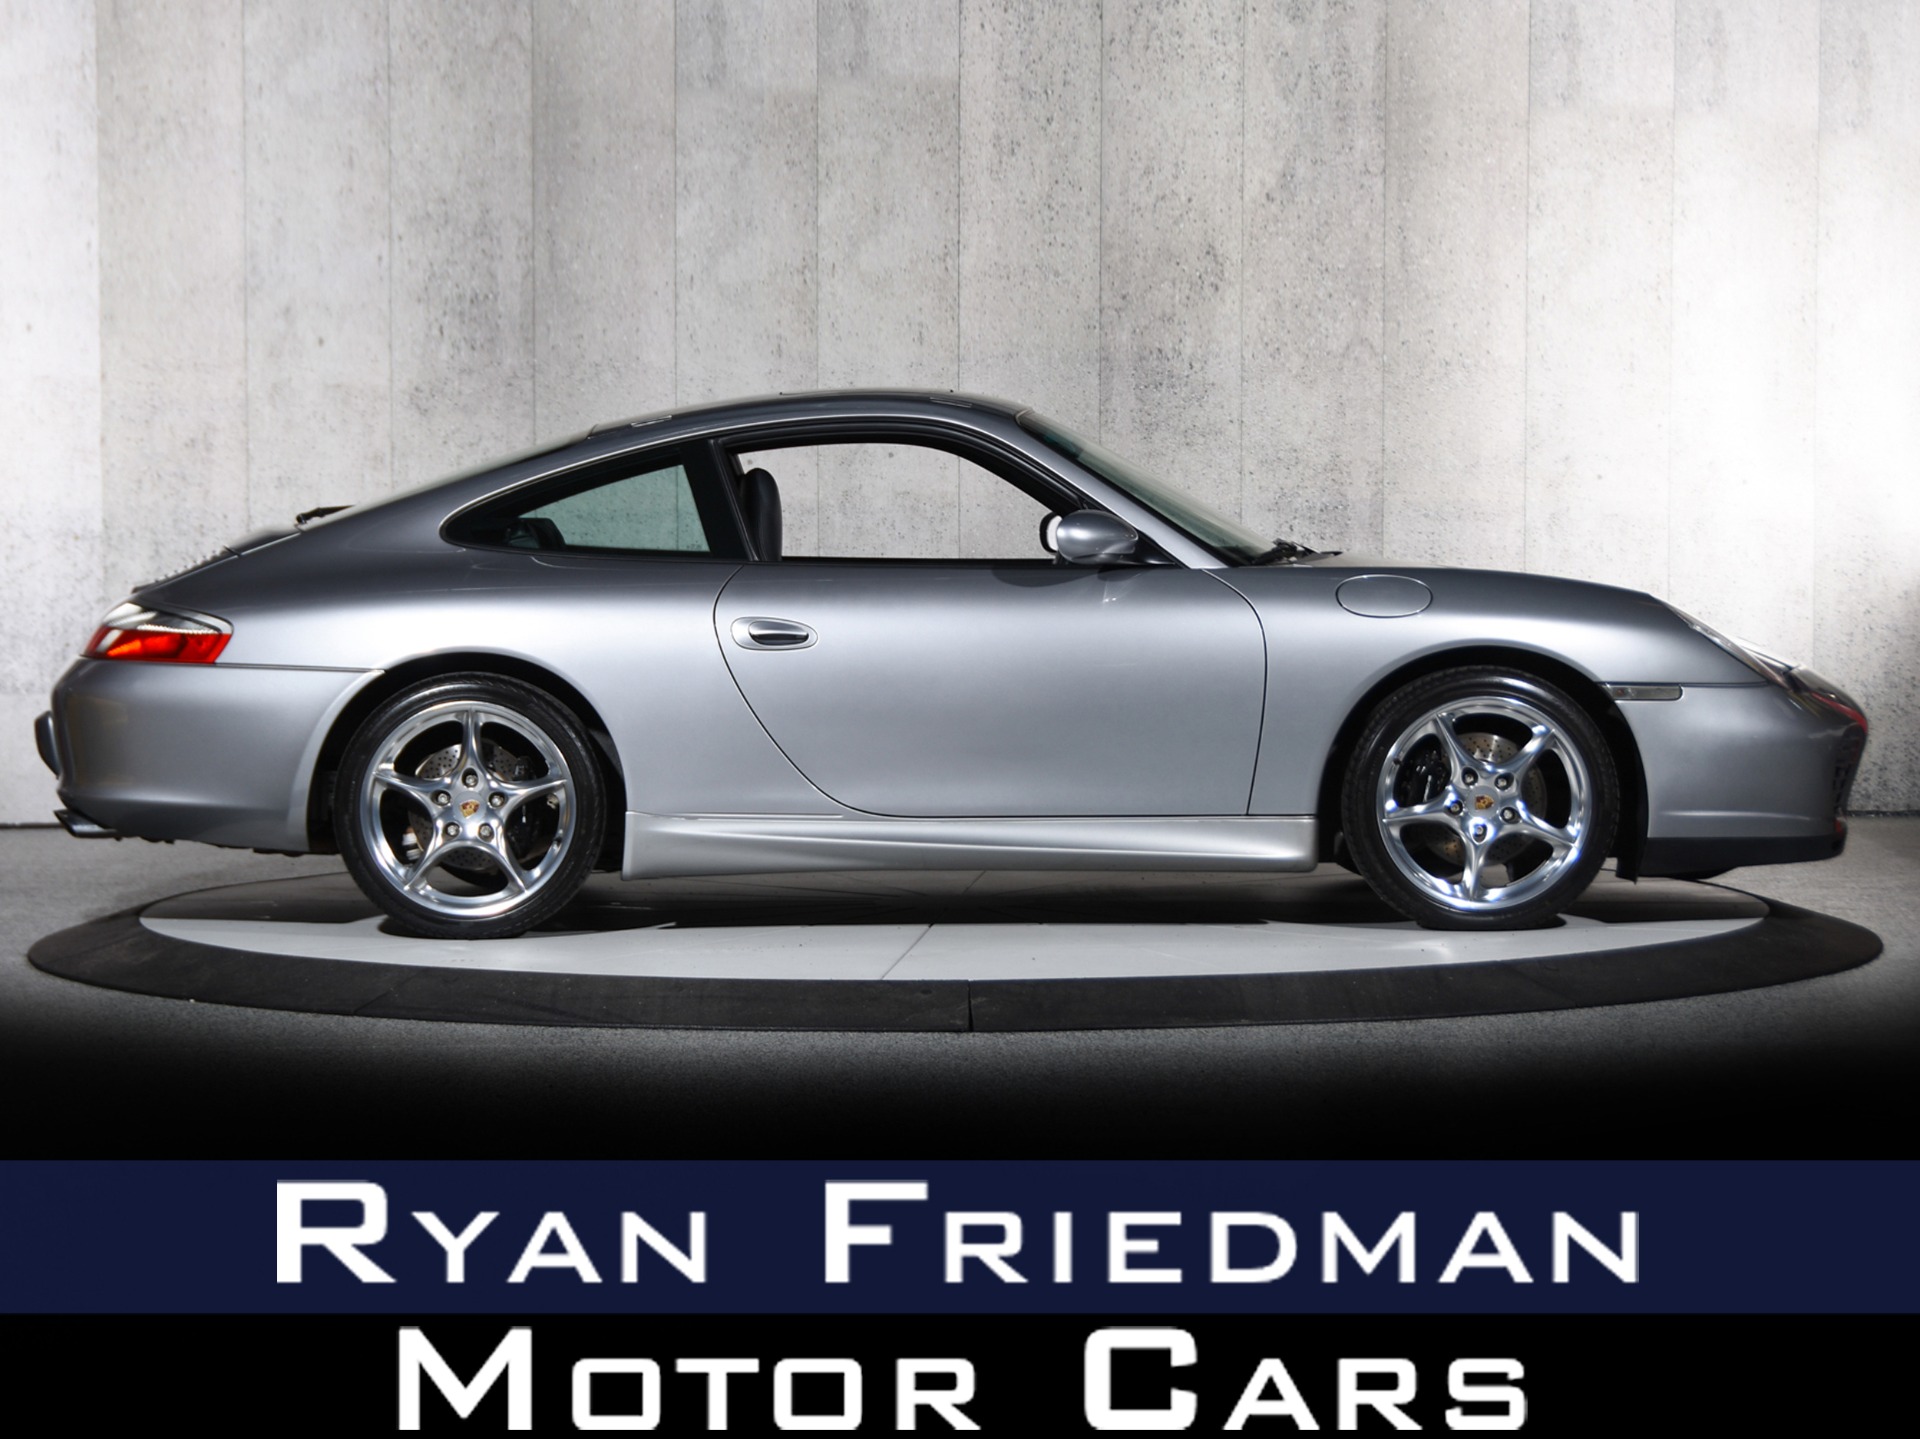 #1351 For Sale Used 911 | Anniversary Motor (Sold) 2004 Carrera Cars Edition Stock LLC Ryan Porsche Friedman 40th